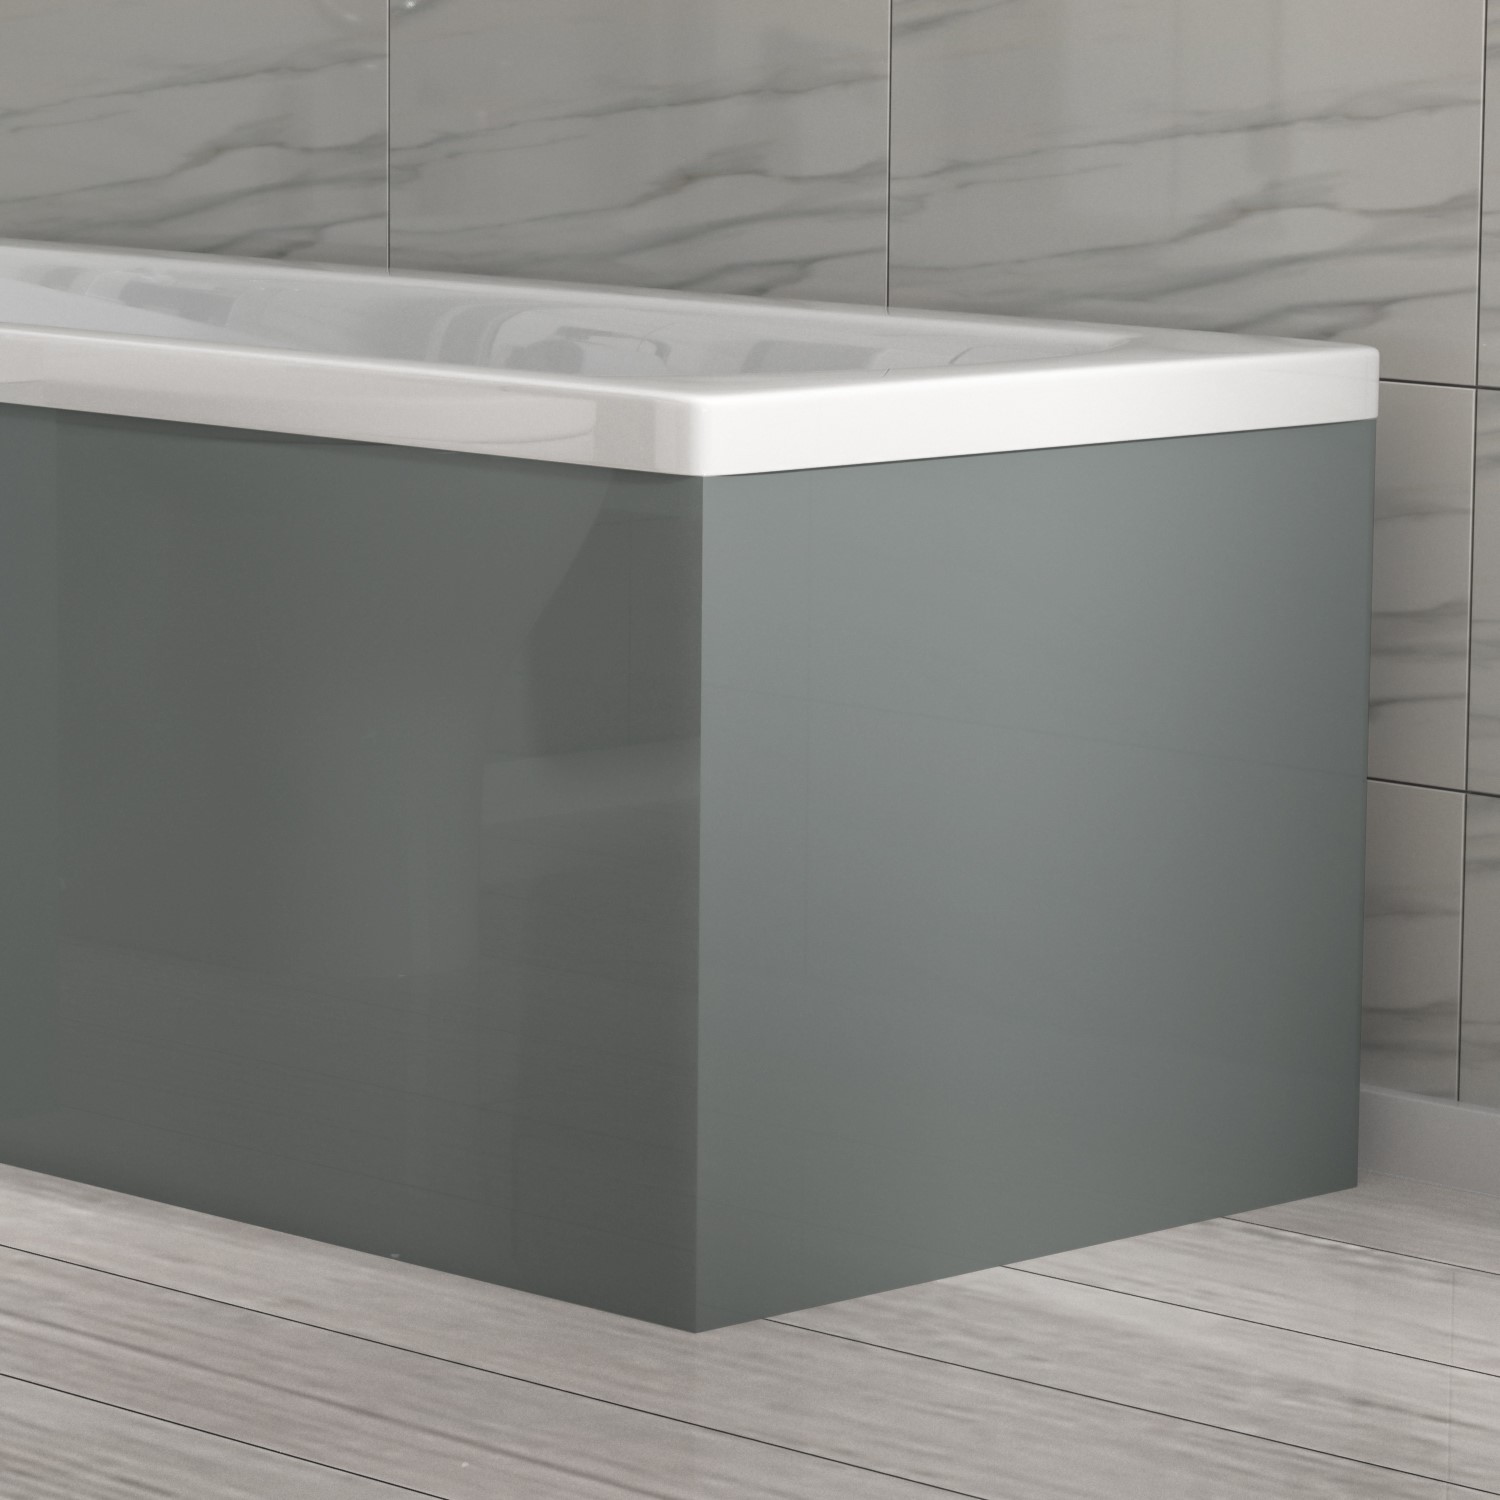 800mm Light Grey End Bath Panel - Pendle